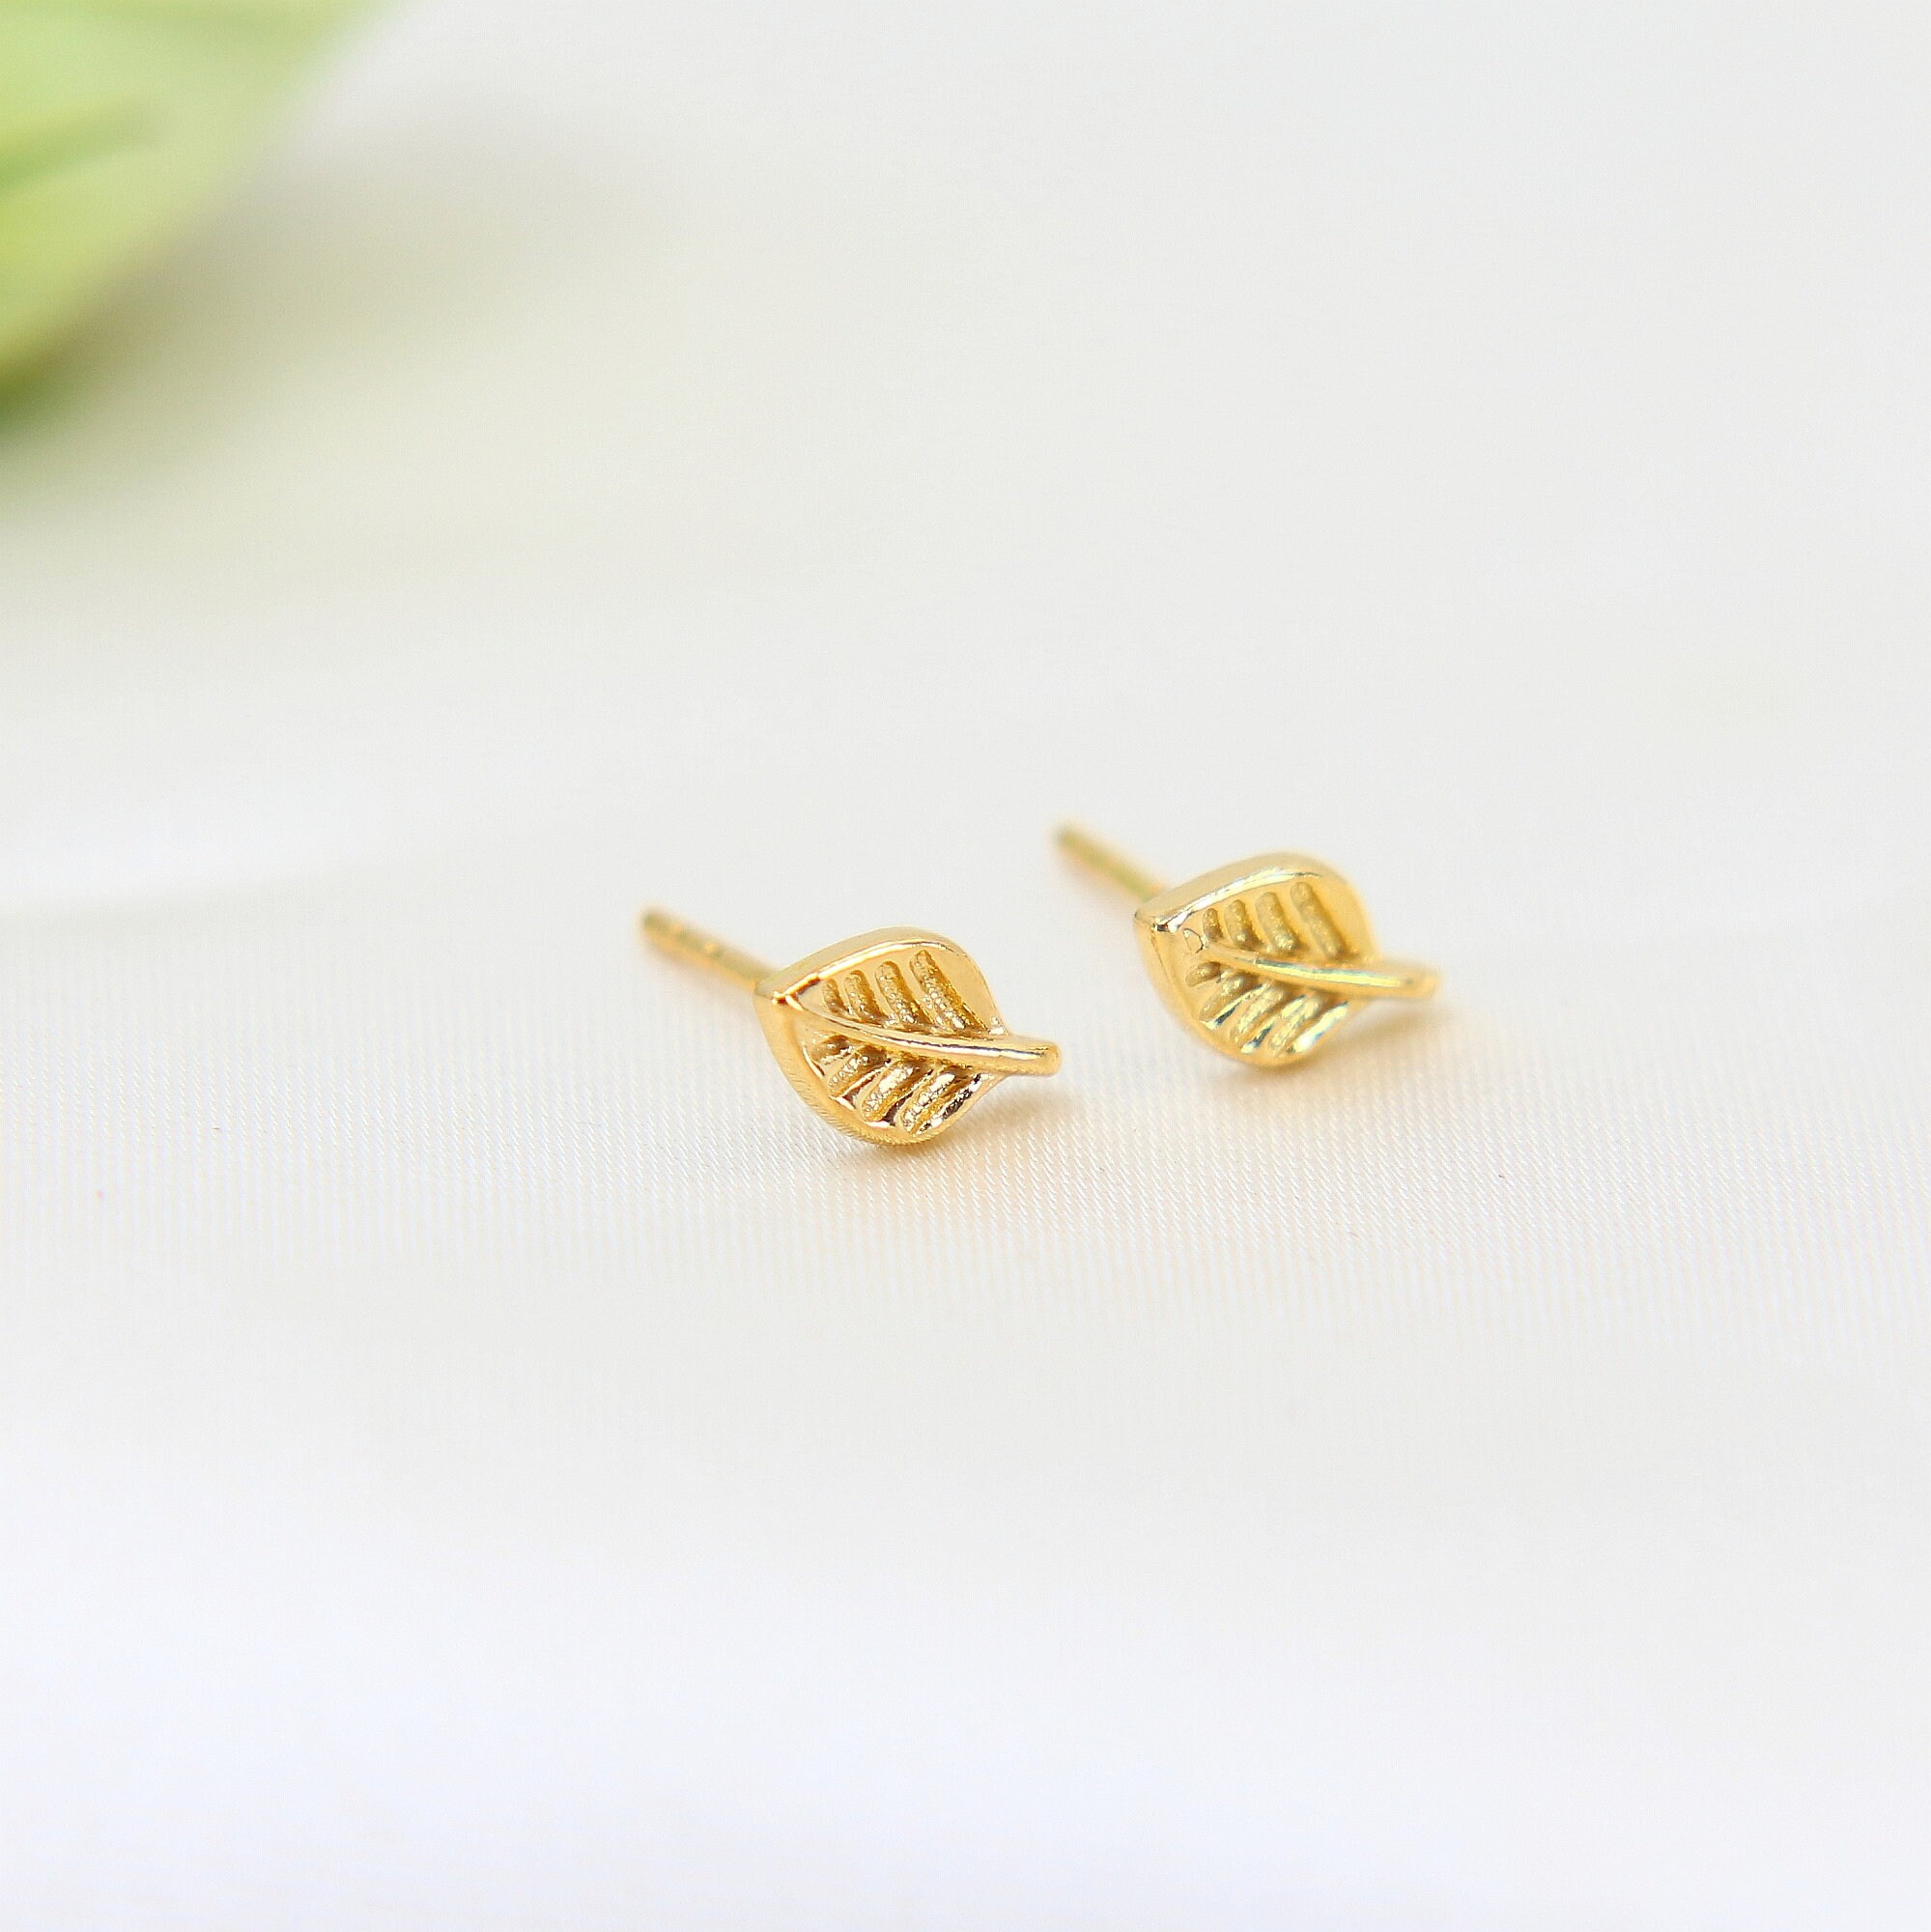 Tiny Leaf Earrings Gold Leaf Studs Earrings Plant Earrings | Etsy